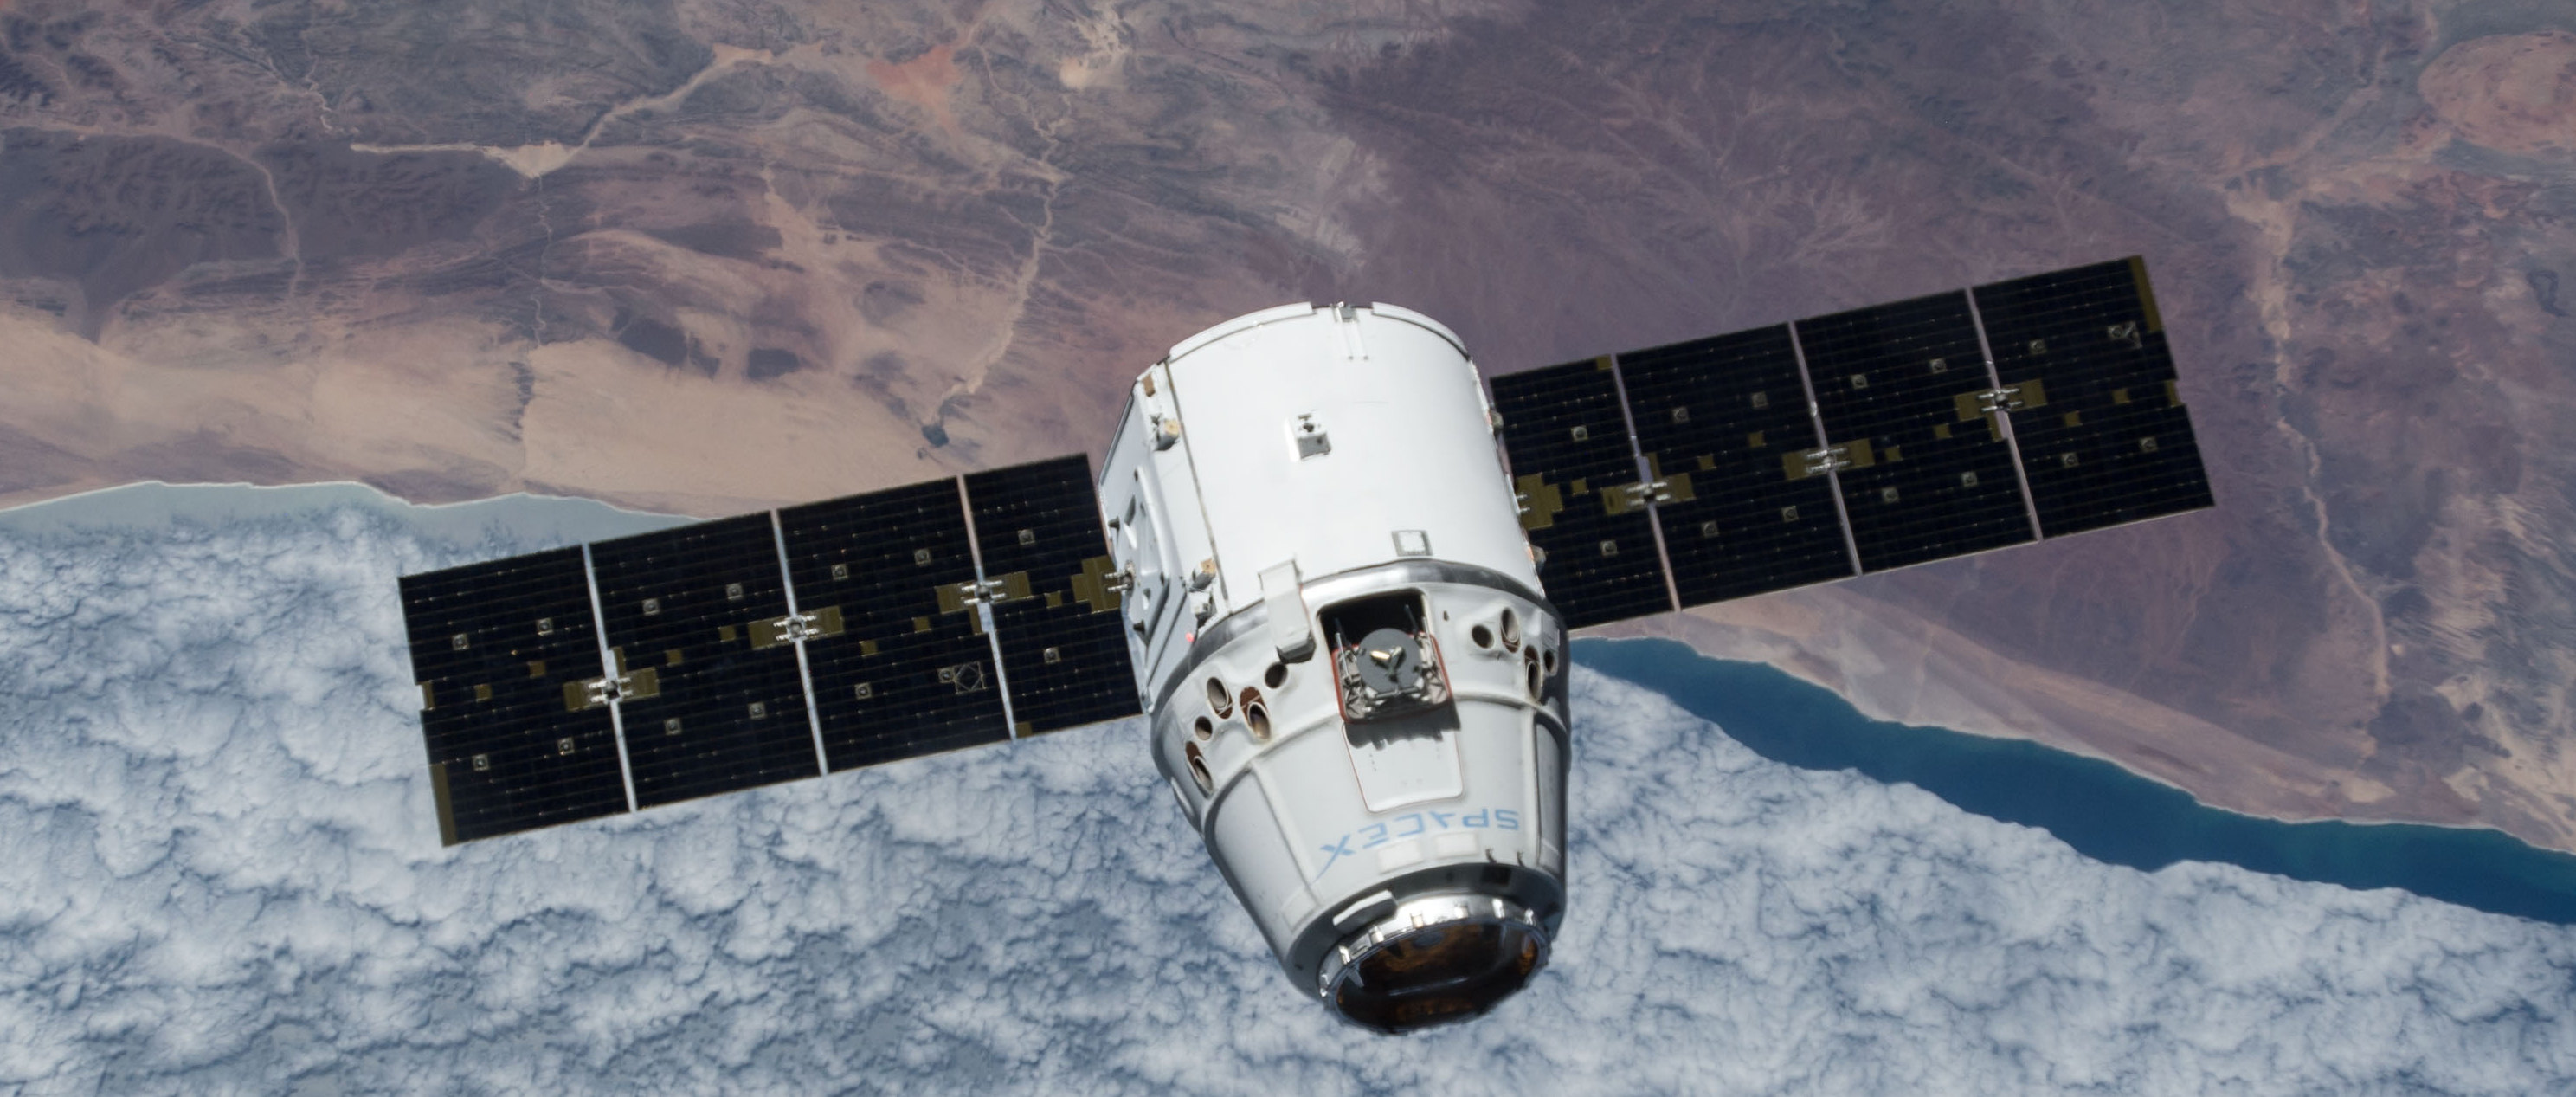 SpaceX запустили на орбиту паровую машину: видео всего процесса